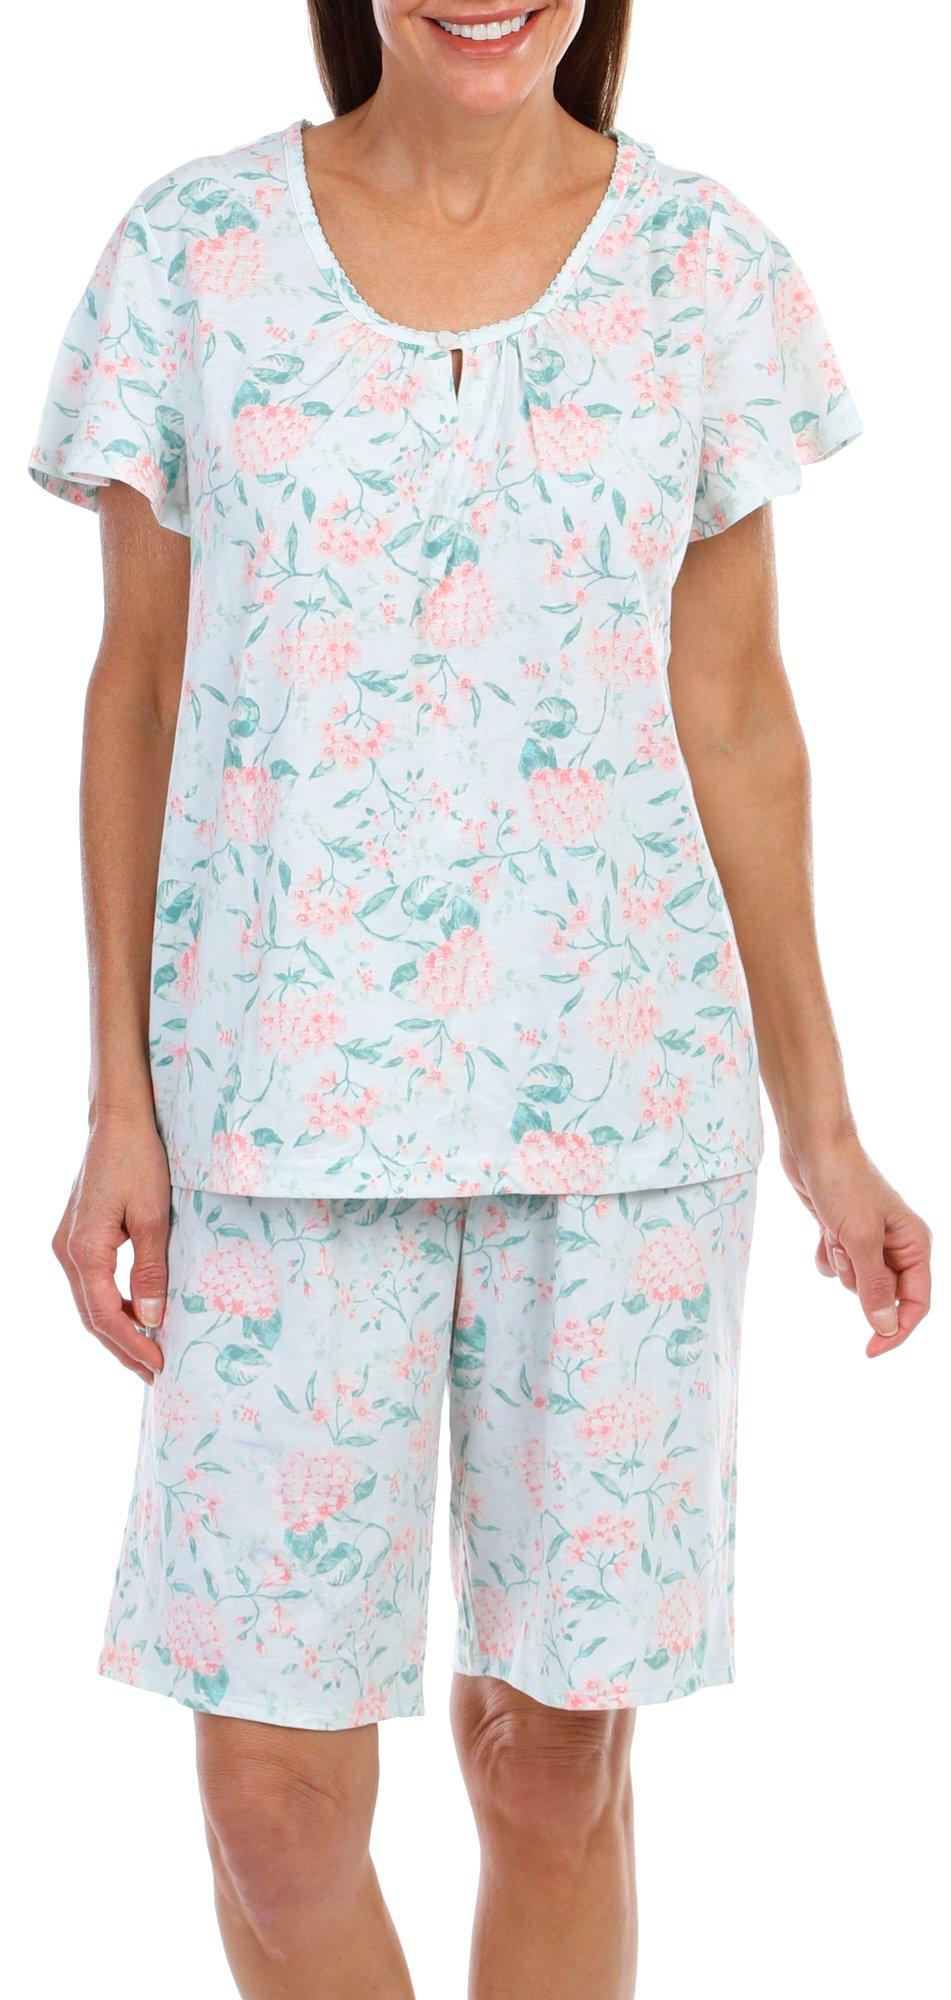 Women's 2 Pc Floral Pajama Shorts Set